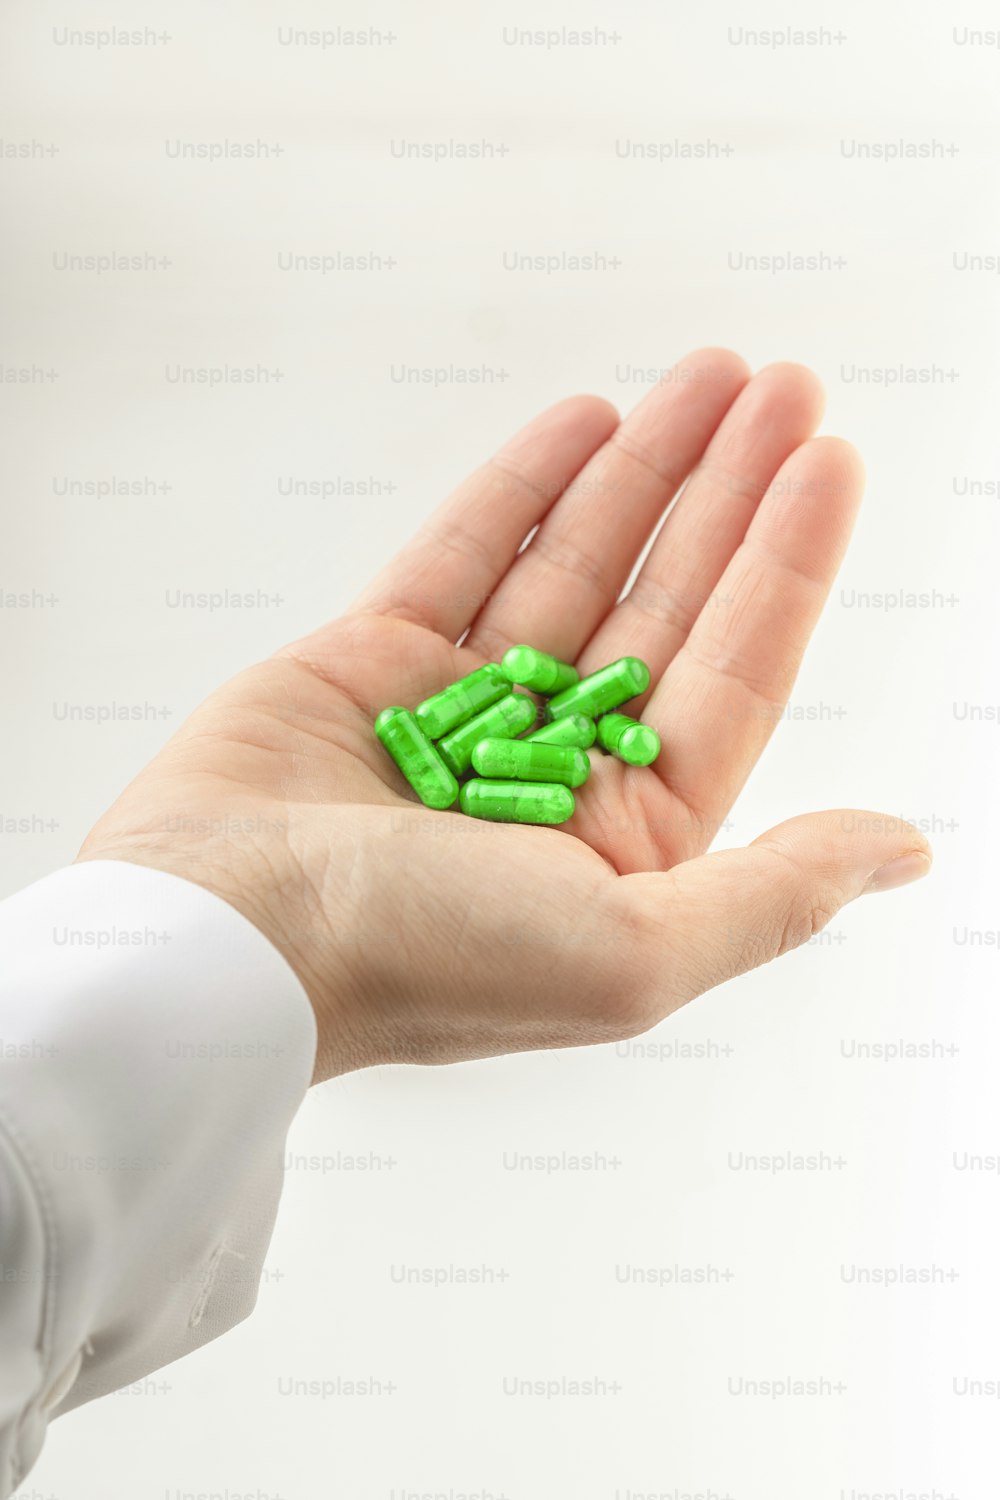 a hand holding a handful of green pills